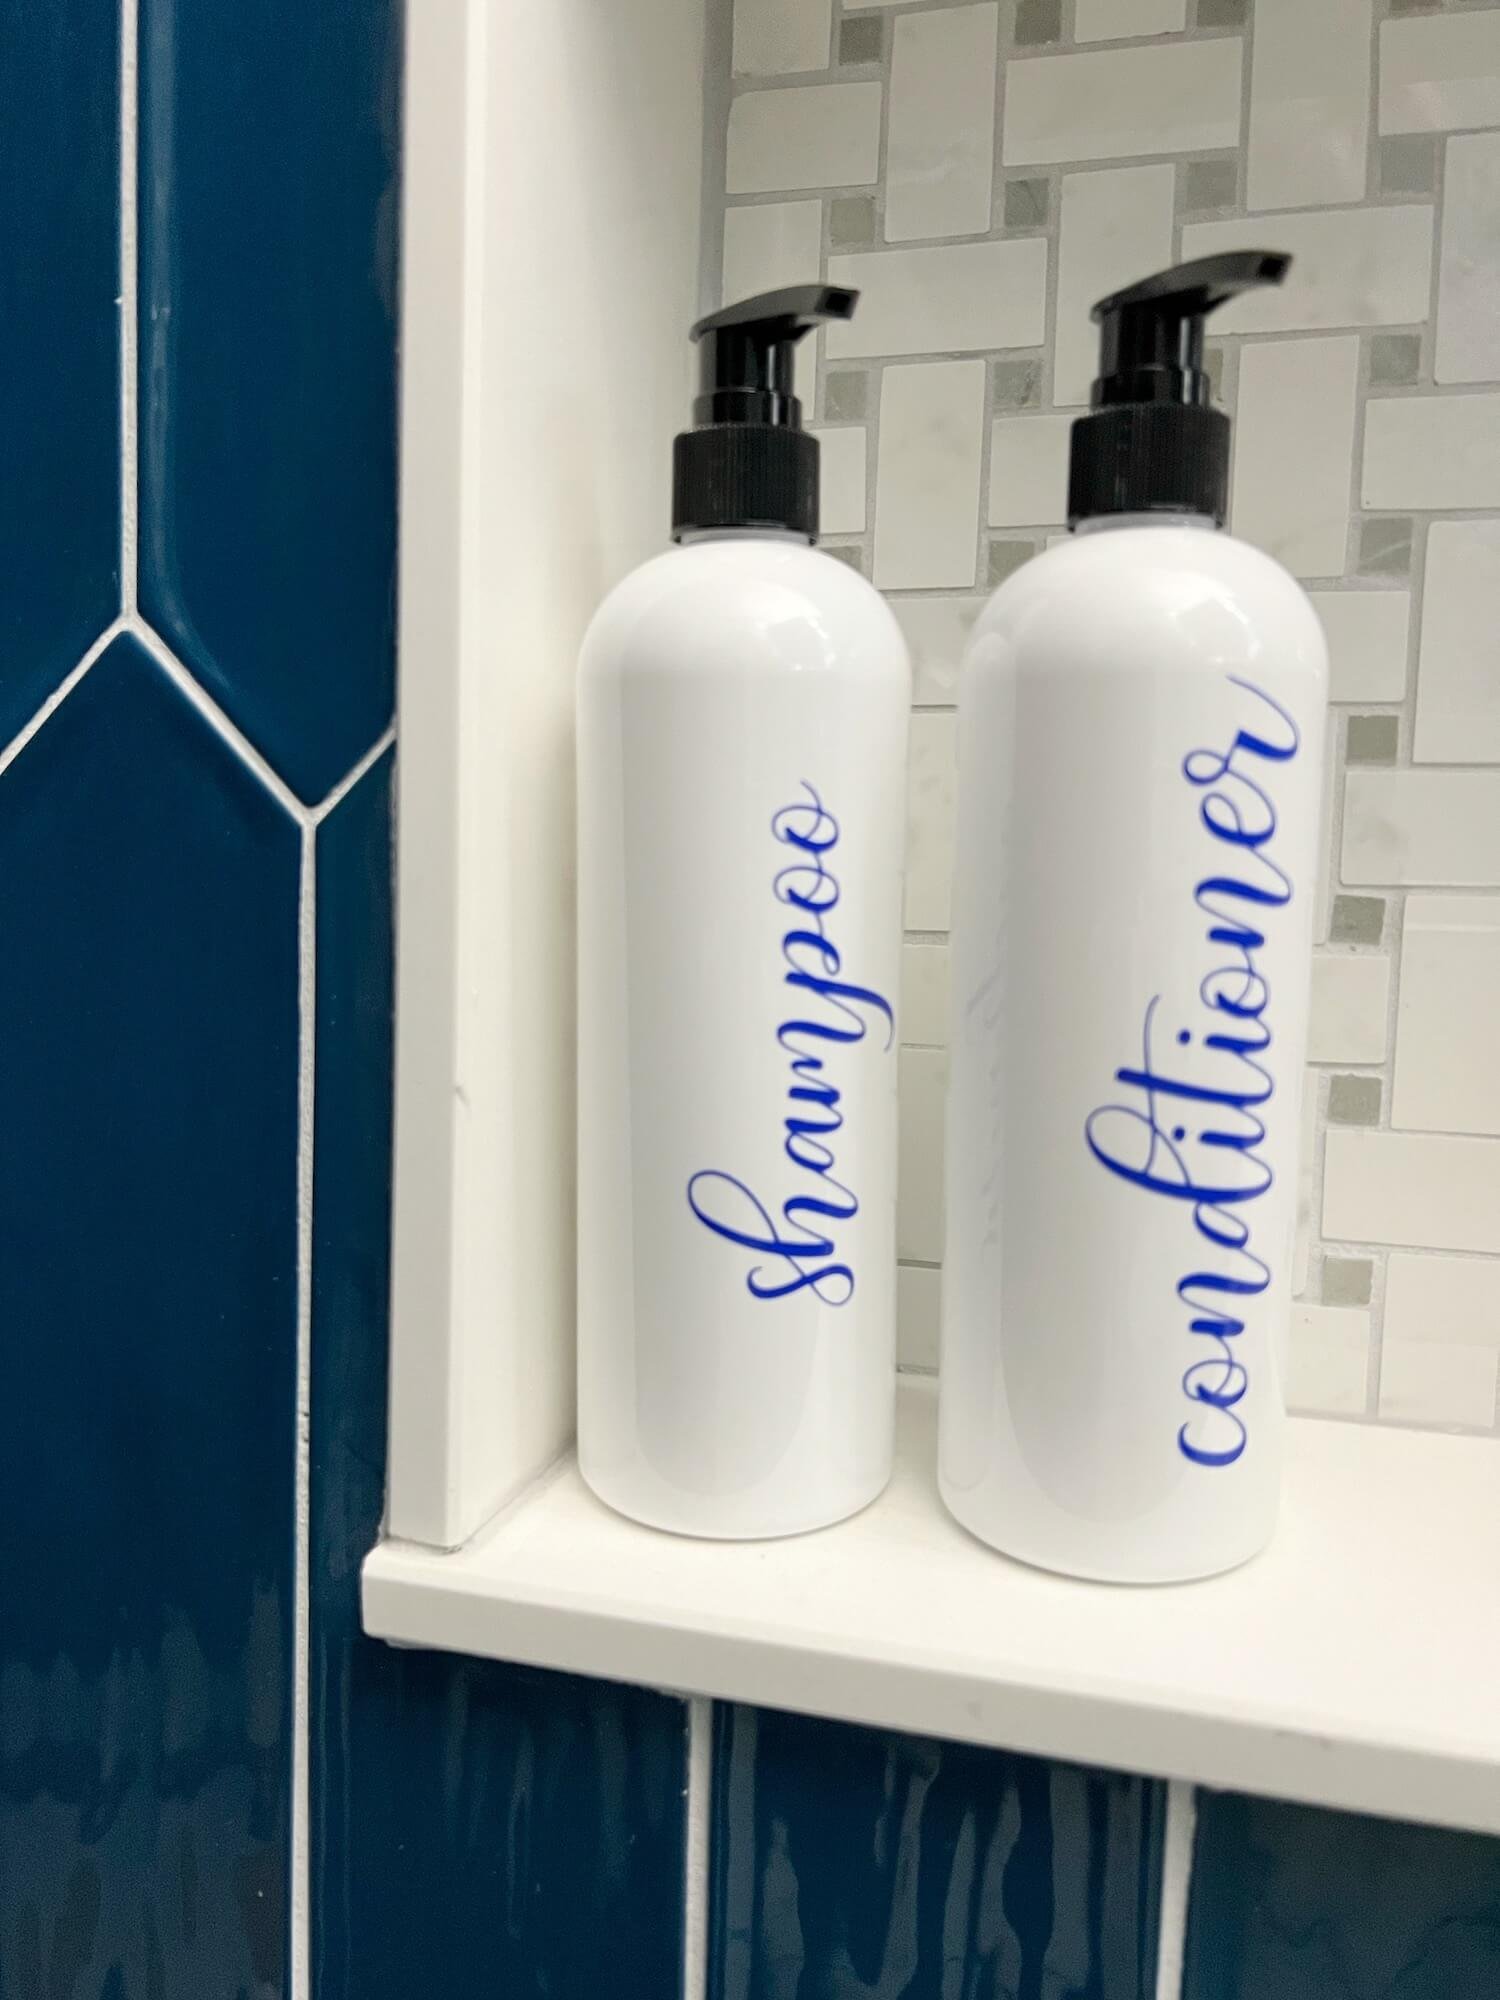 Custom shampoo bottles